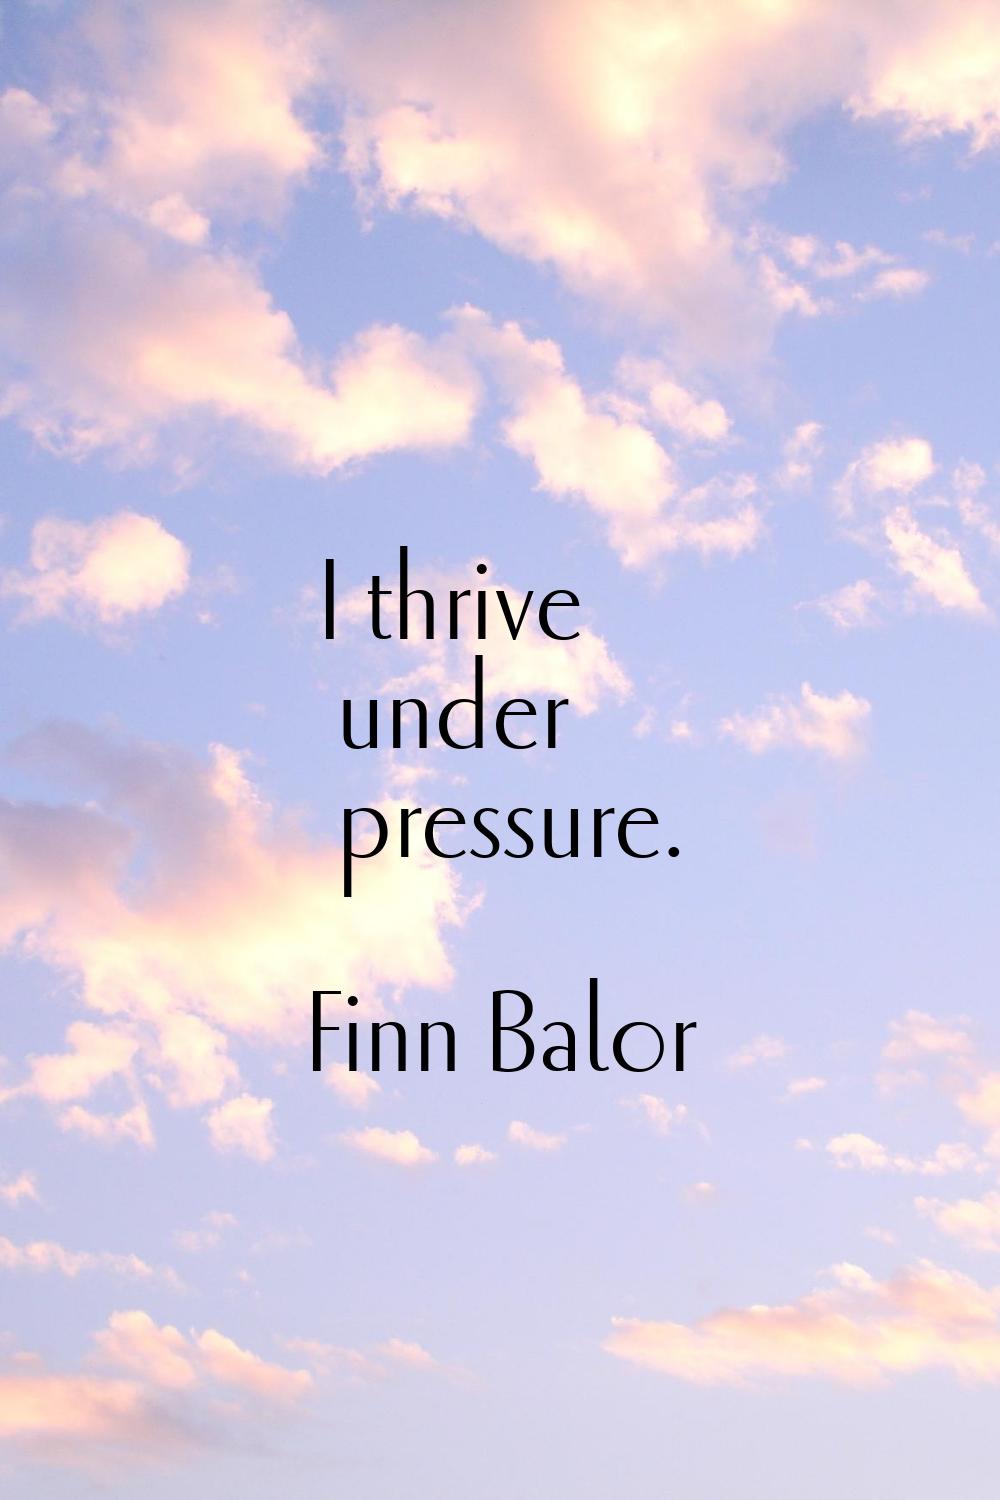 I thrive under pressure.